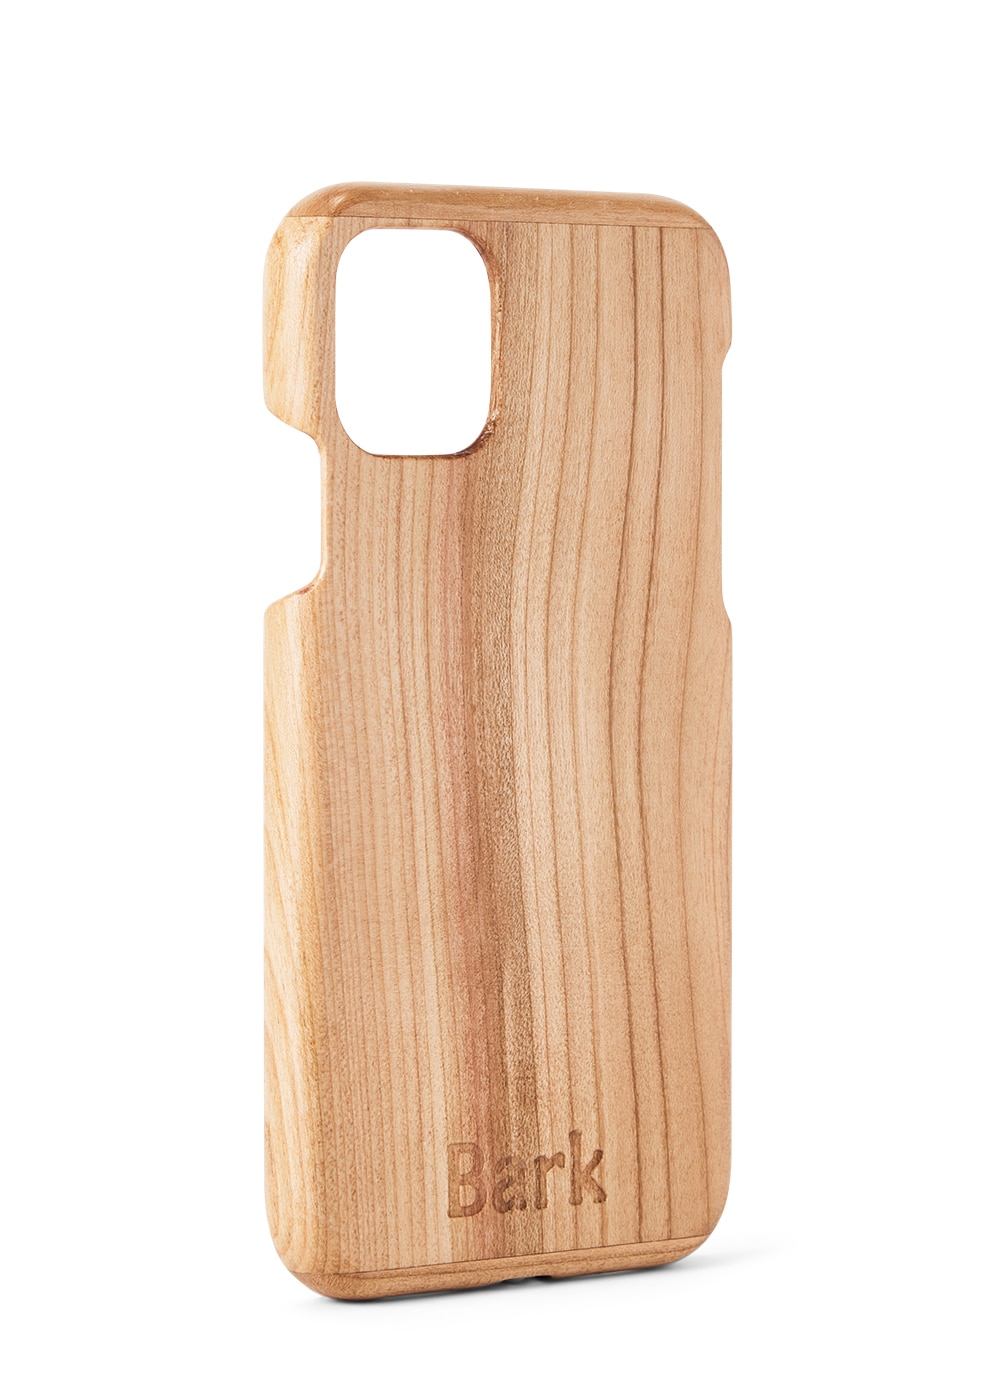 iPhone 11 case made of Swedish hardwood - Körsbär